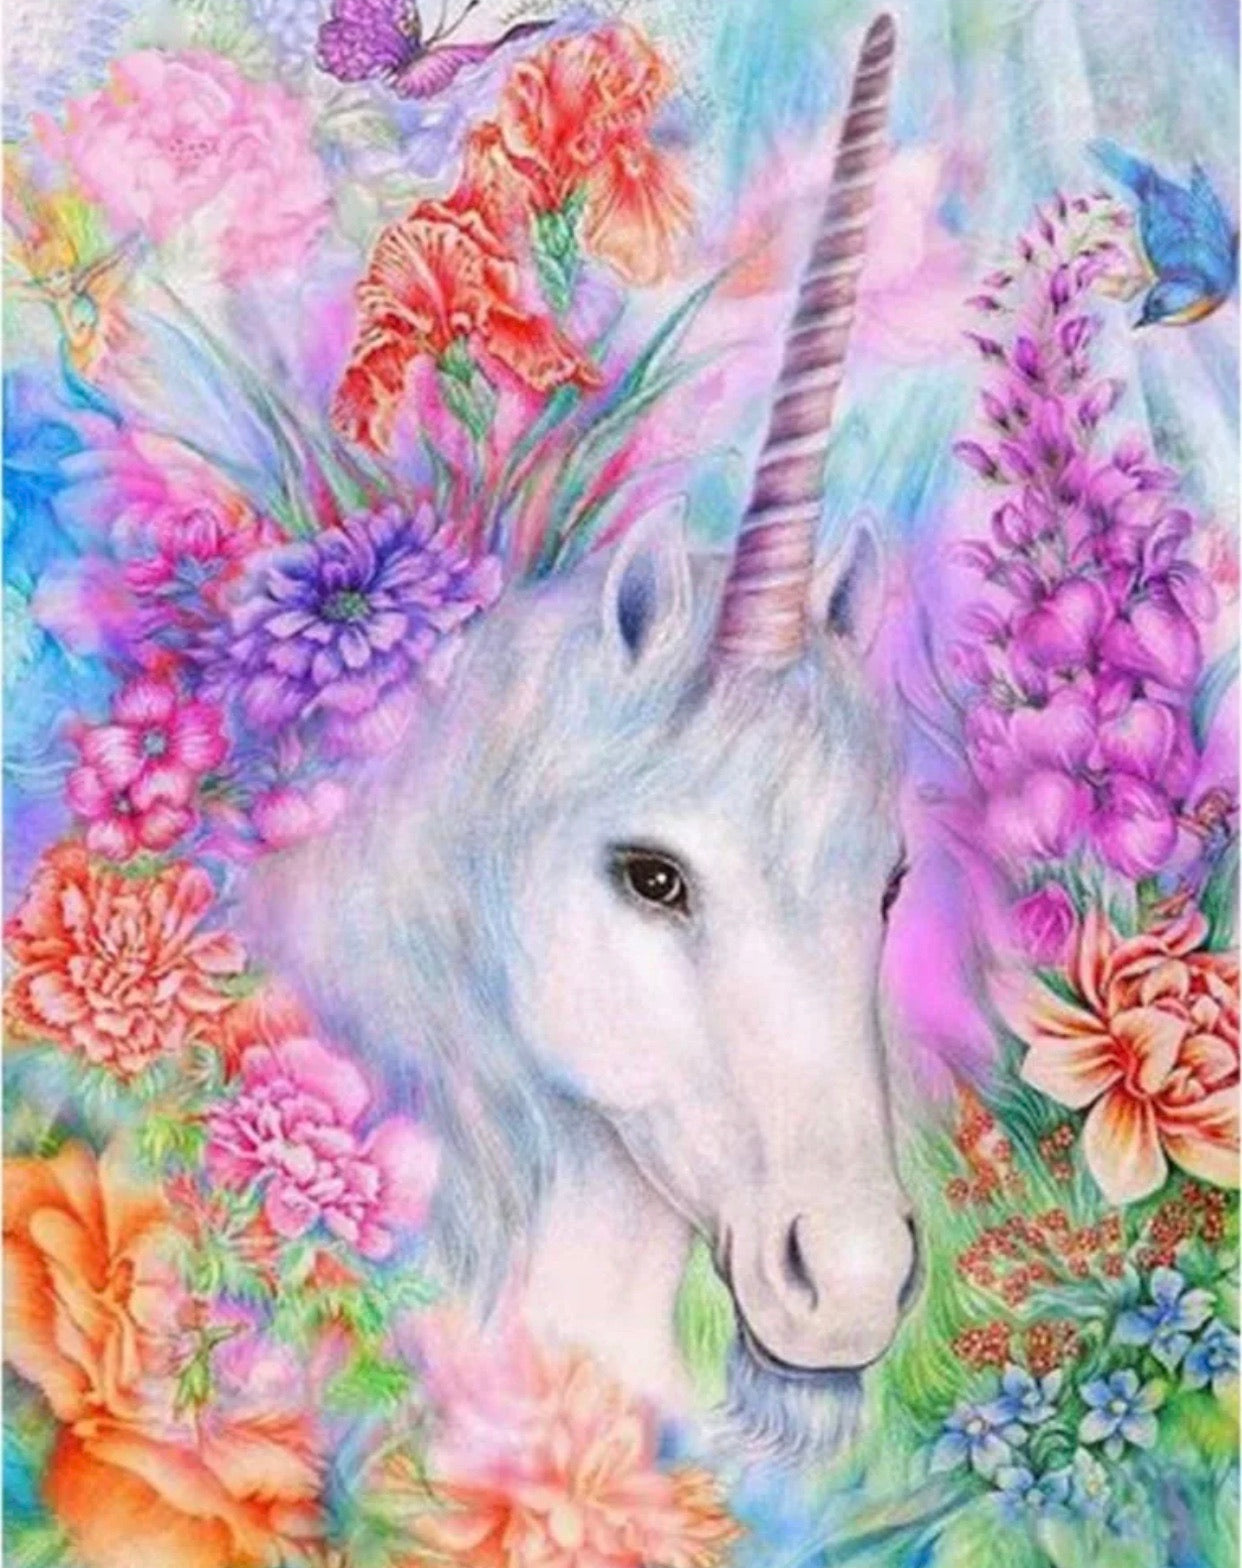 30 x 40 full drill diamond painting - (Hy5814) unicorn flowers